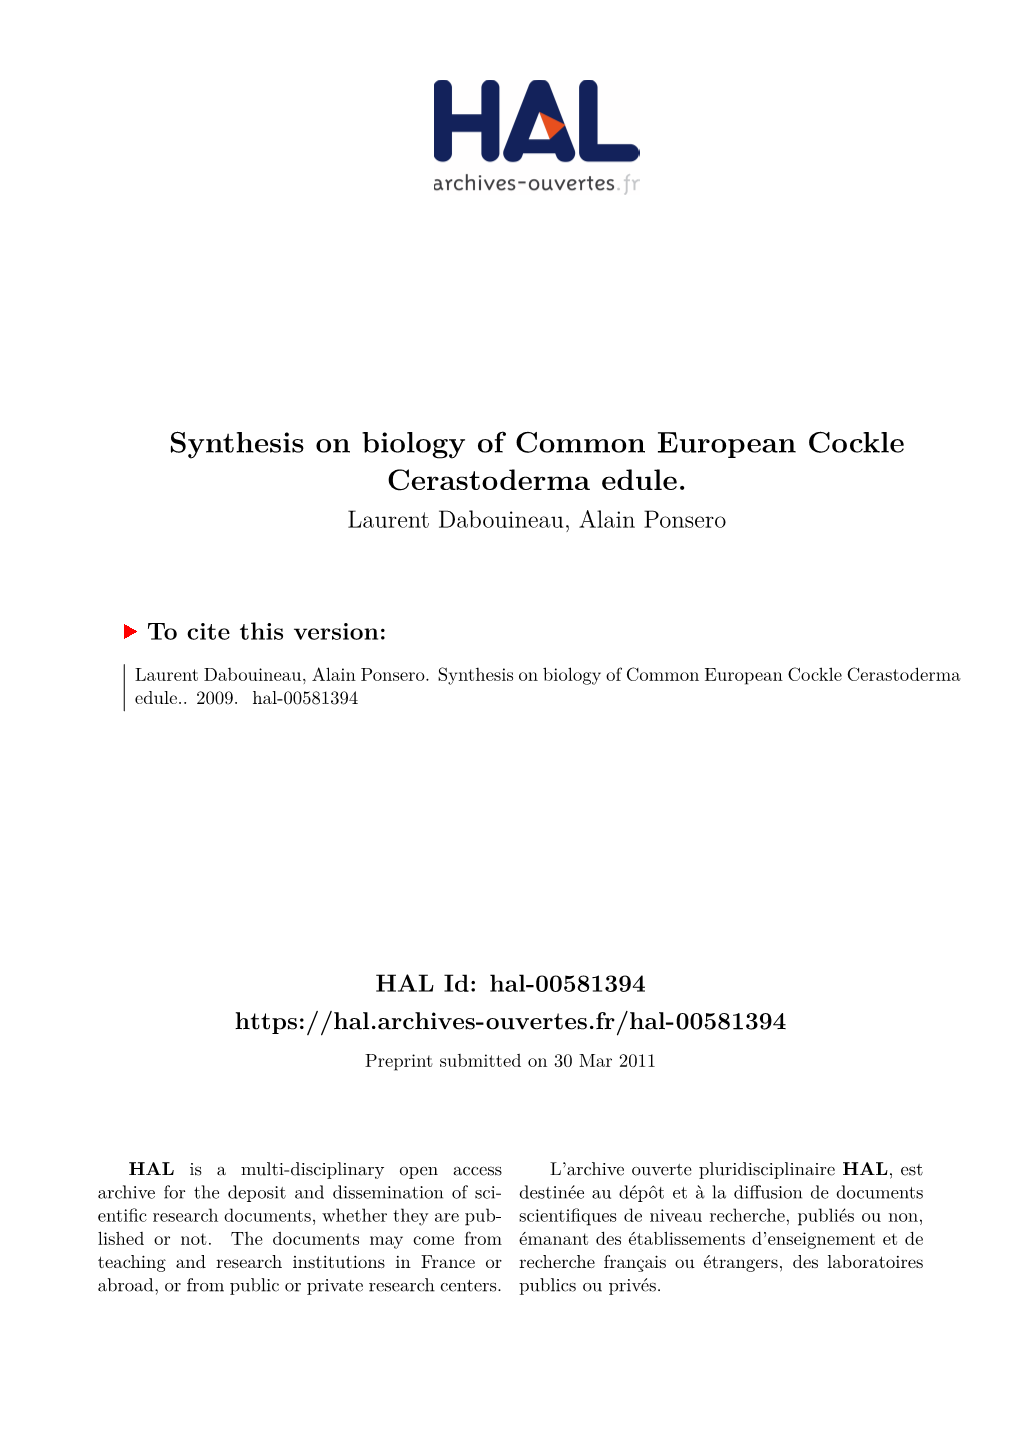 Synthesis on Biology of Common European Cockle Cerastoderma Edule